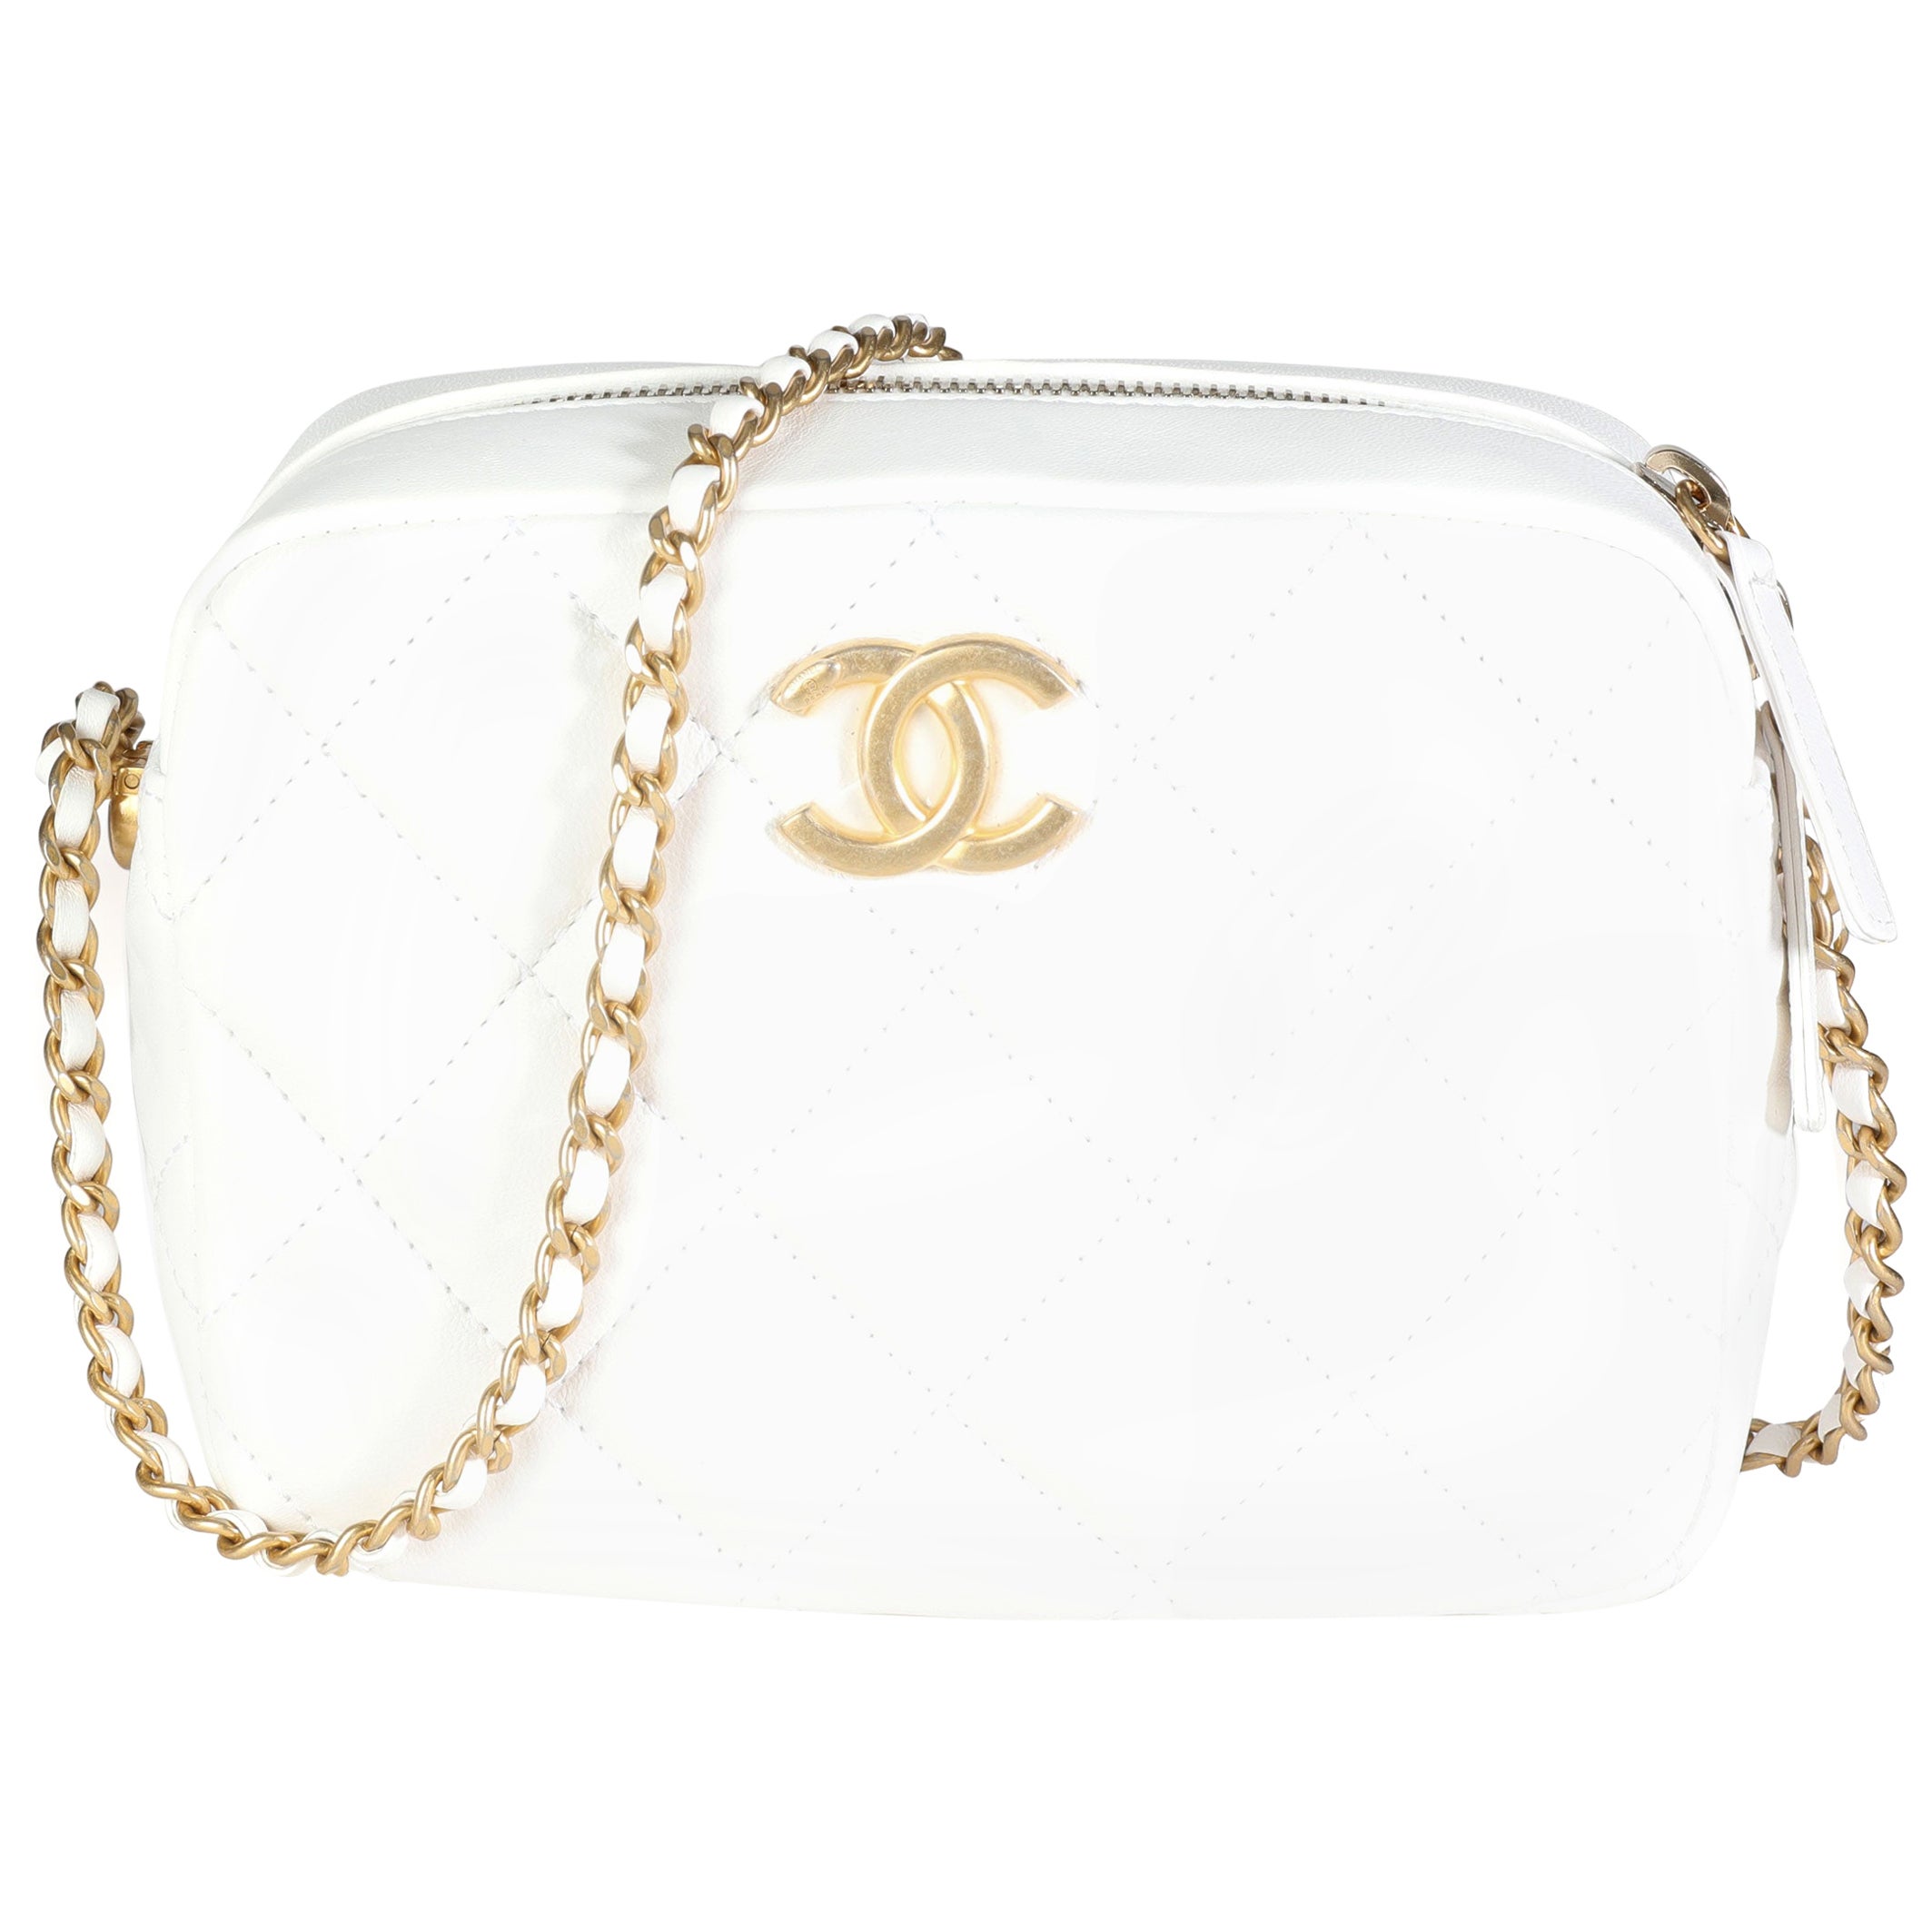 Chanel Camera Bag Small, White Smooth Calfskin, New in Box WA001